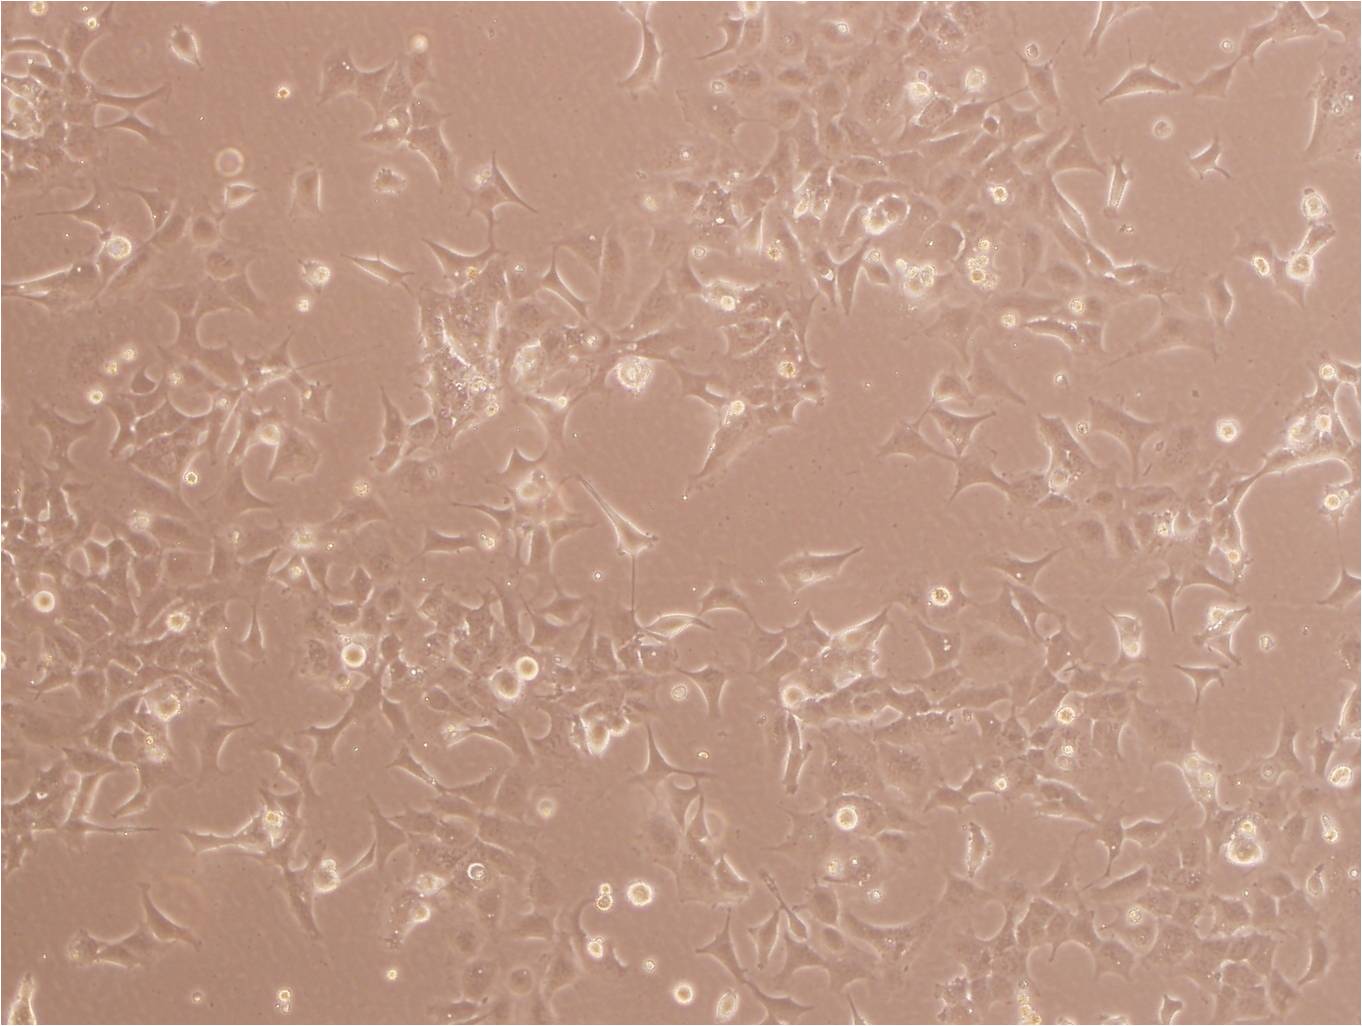 NCI-H1573 Cells|人肺癌腺癌细胞系